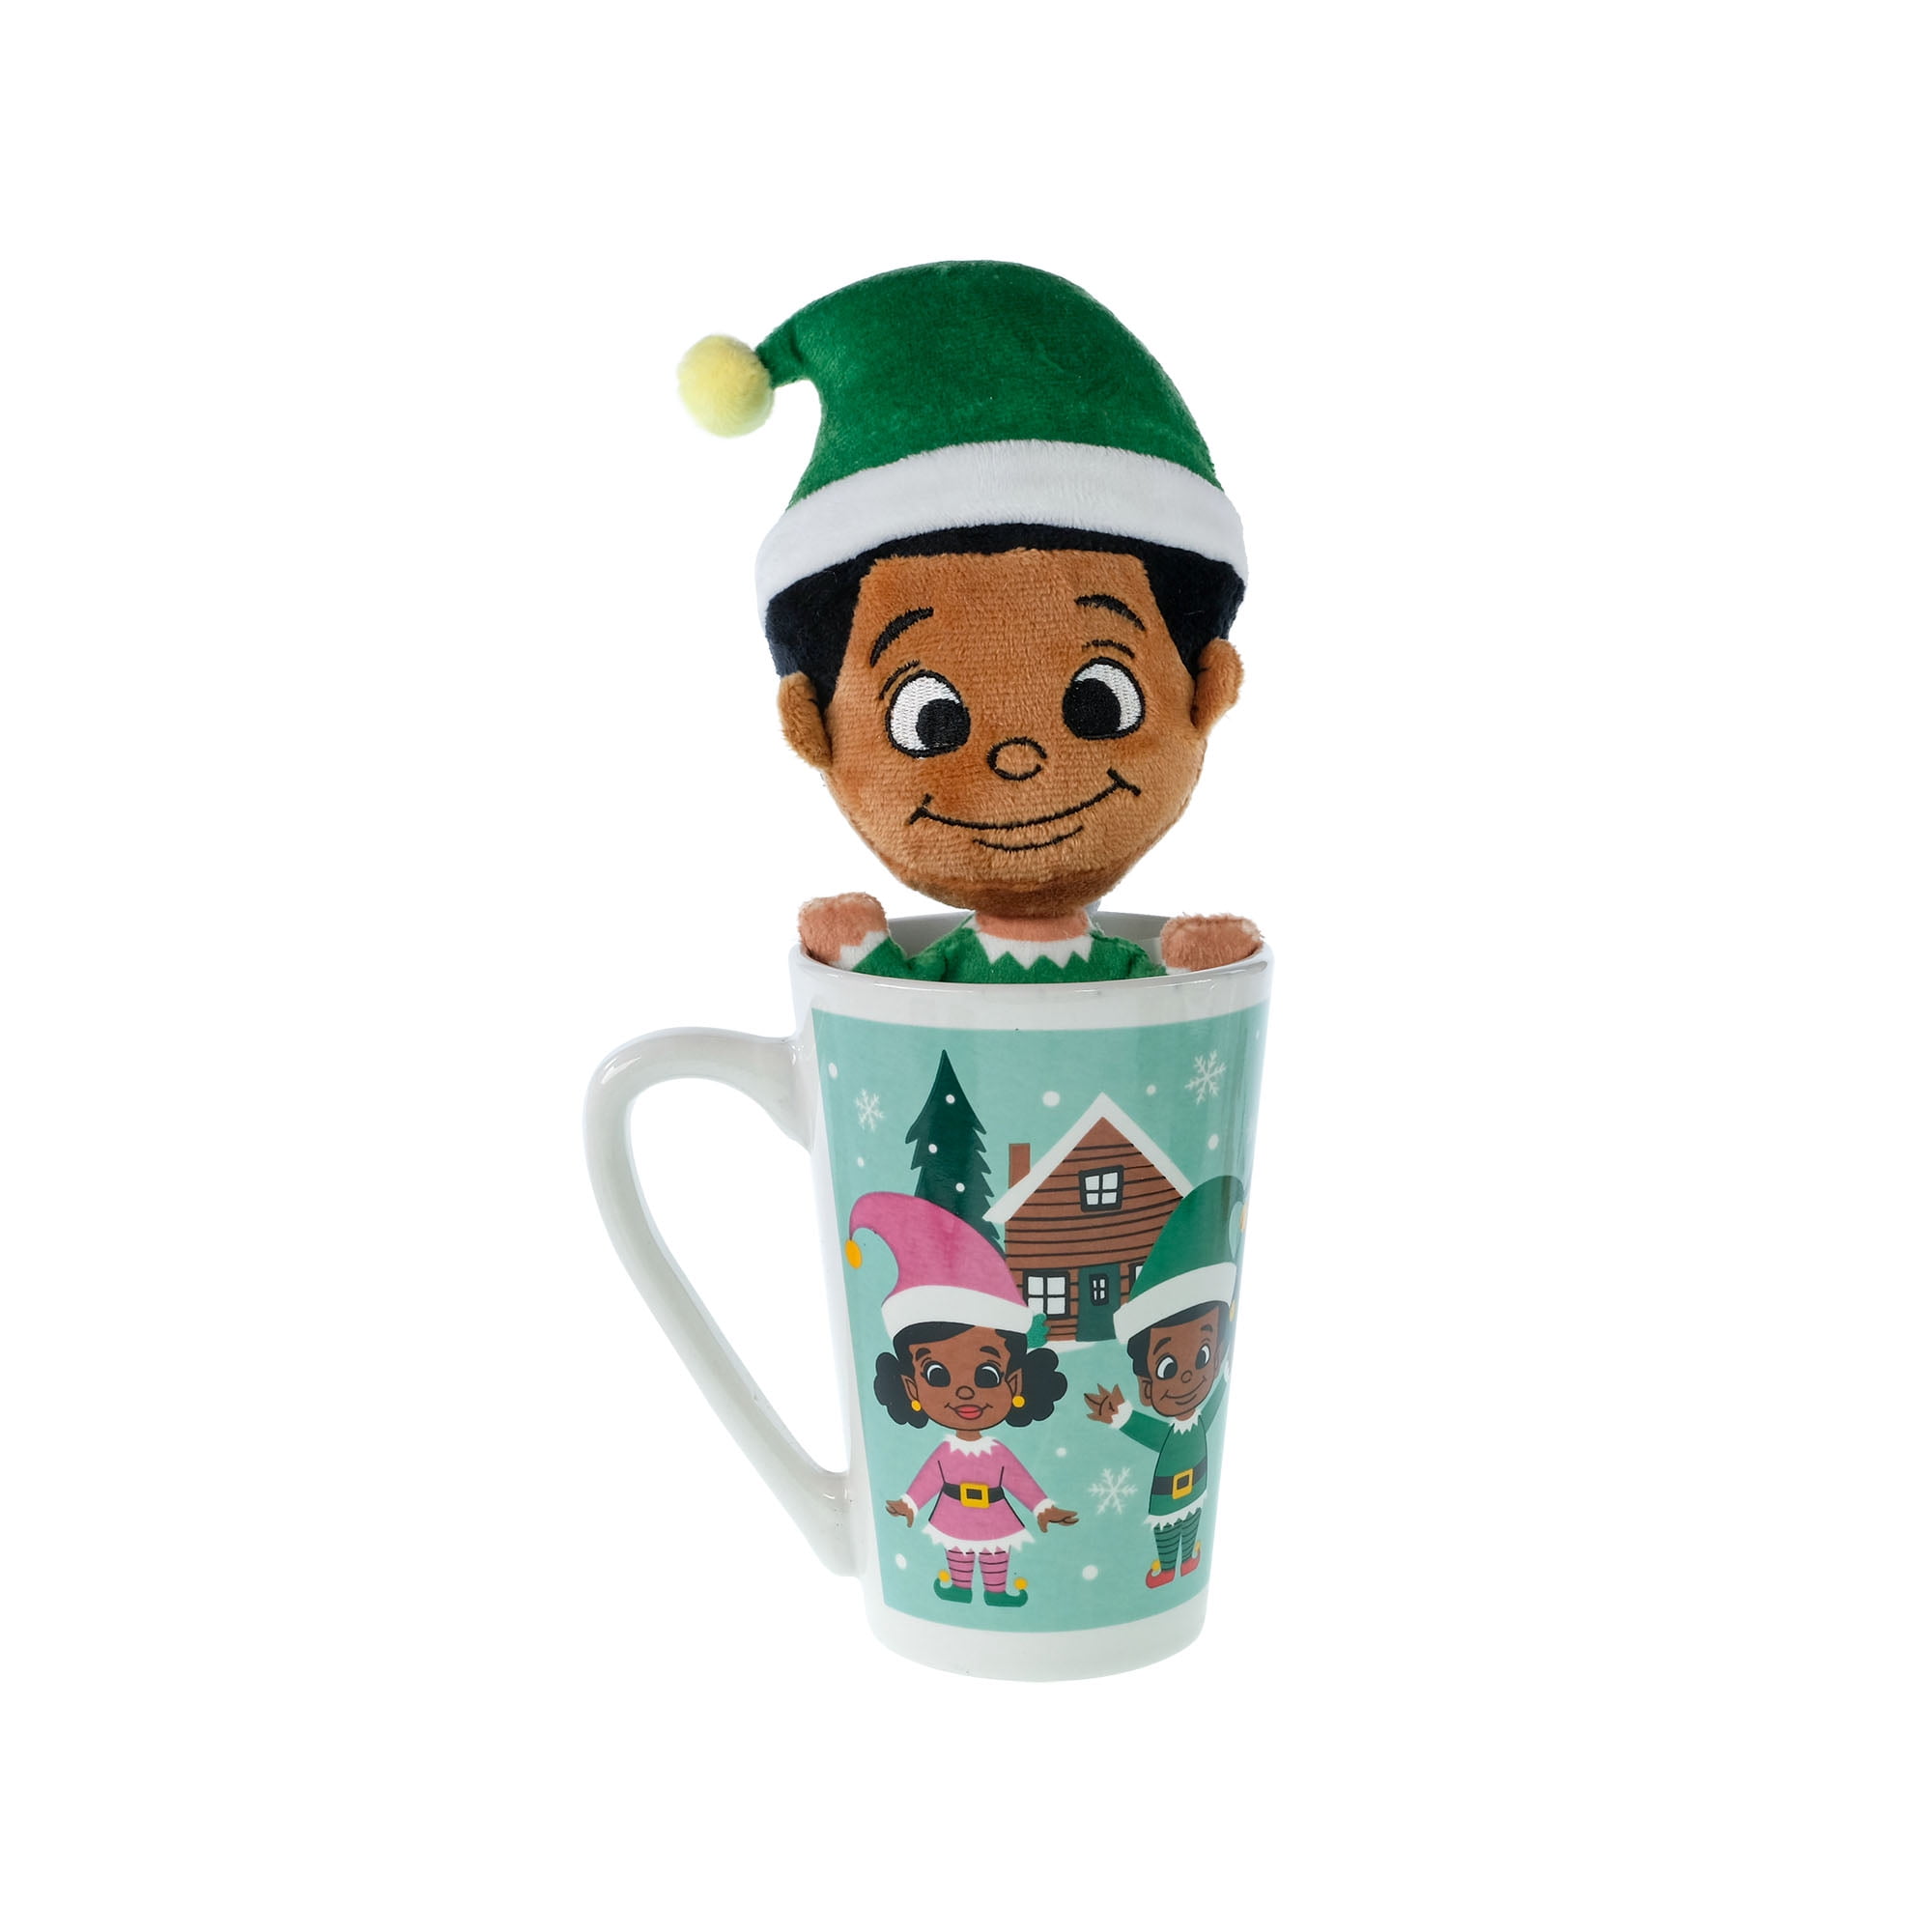 Black Paper Party, Elf 7 inch Plush with a 15 oz Ceramic Latte Mug, Multi Color, Green